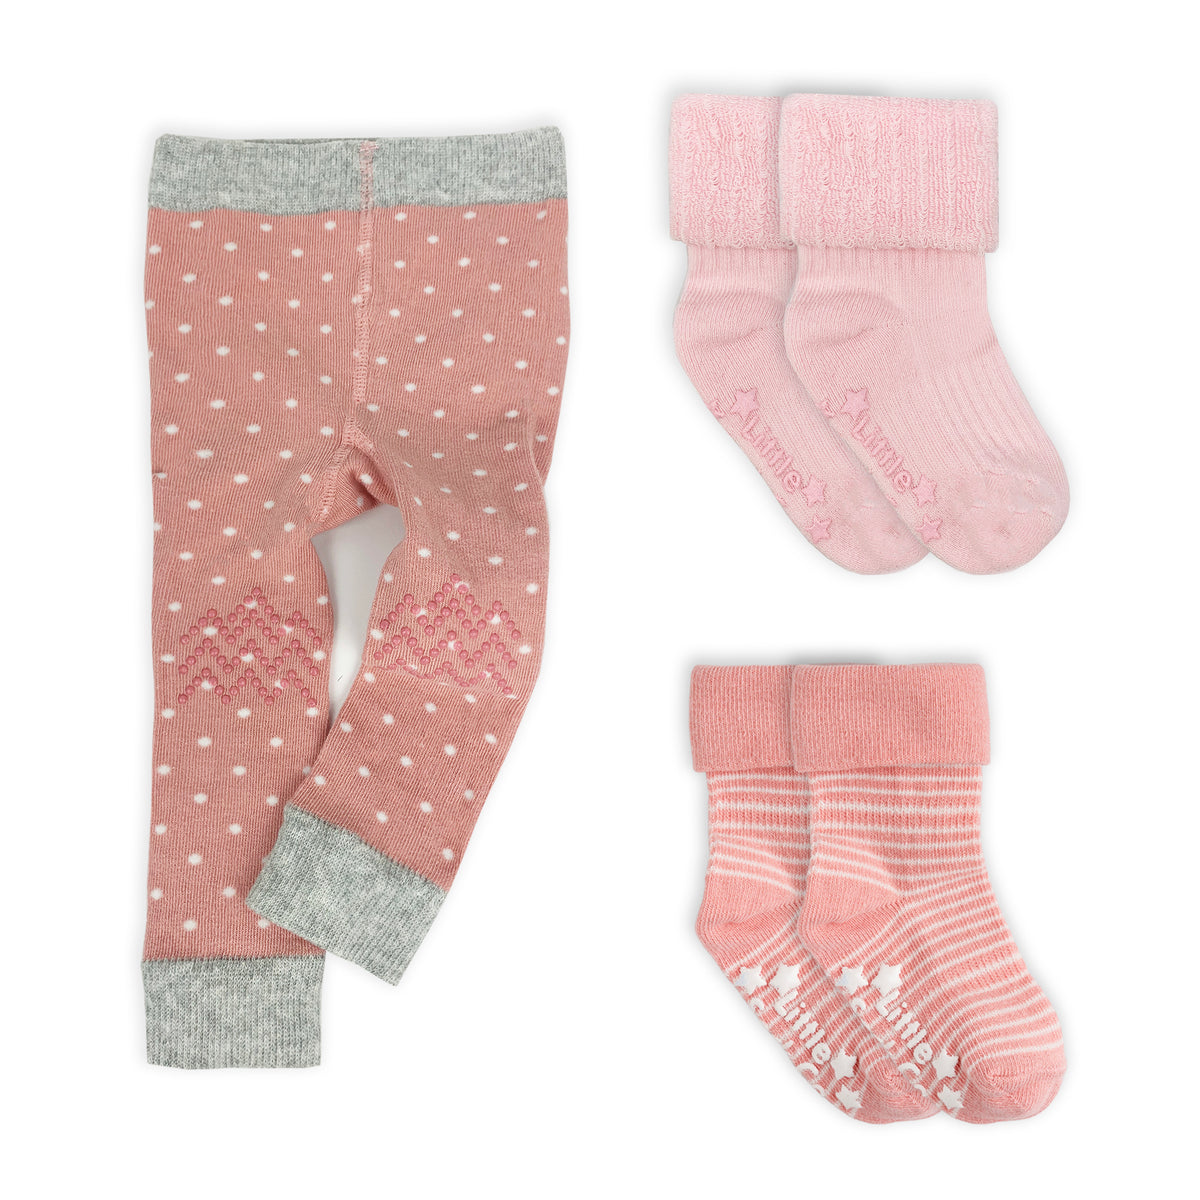 Leggings & Socks Super Set - Pink